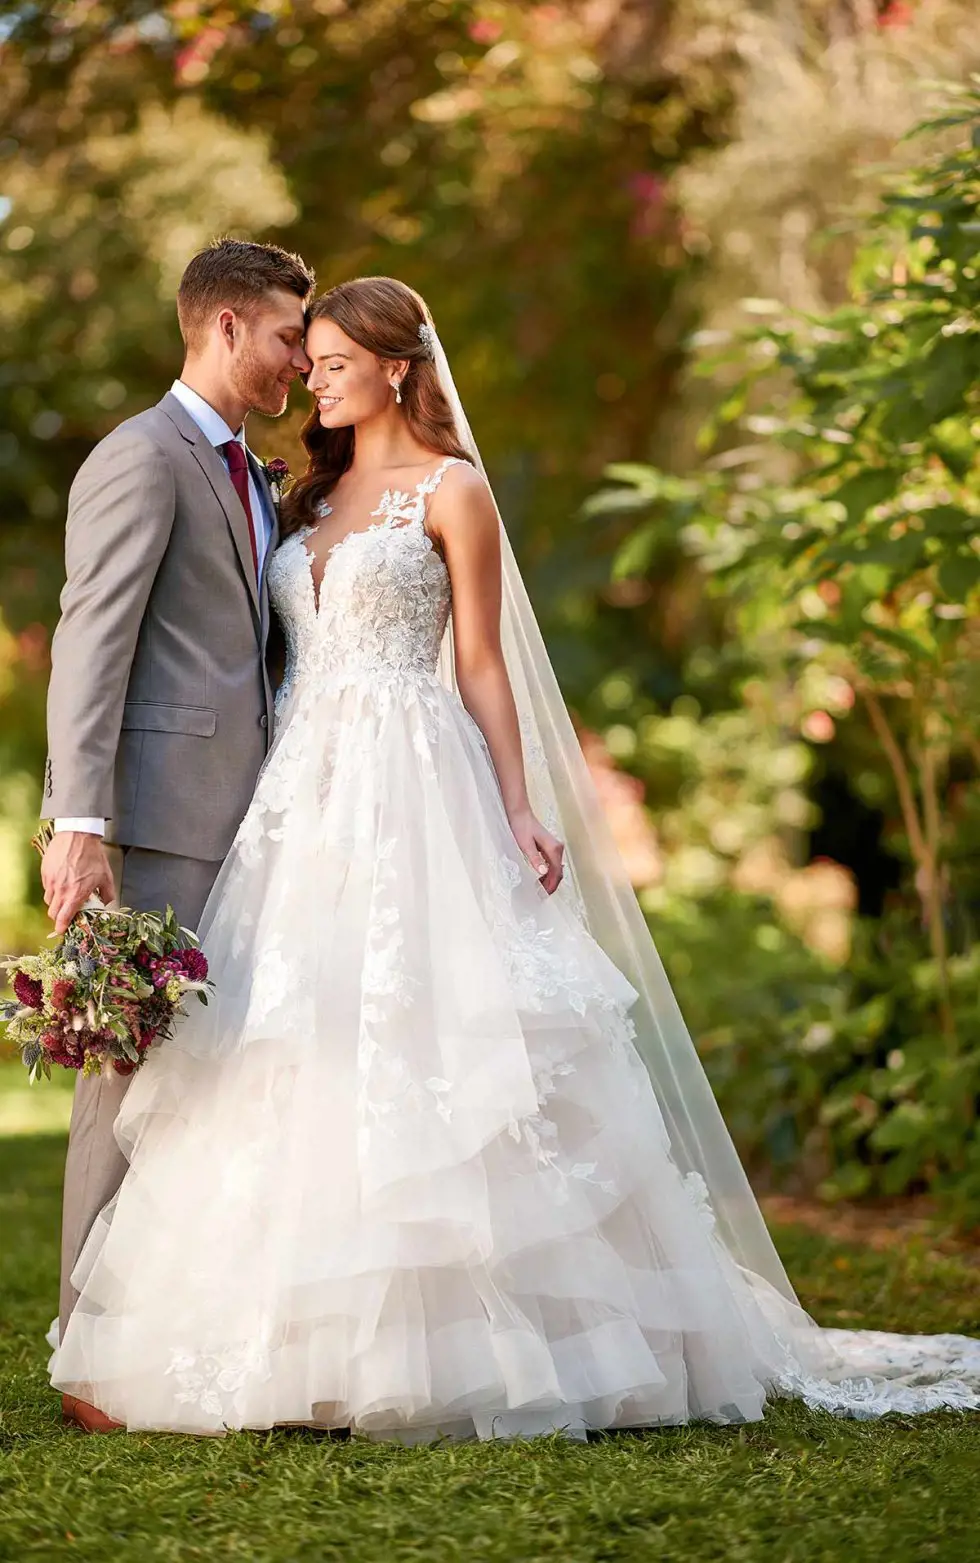 Know Your Wedding Dress Necklines